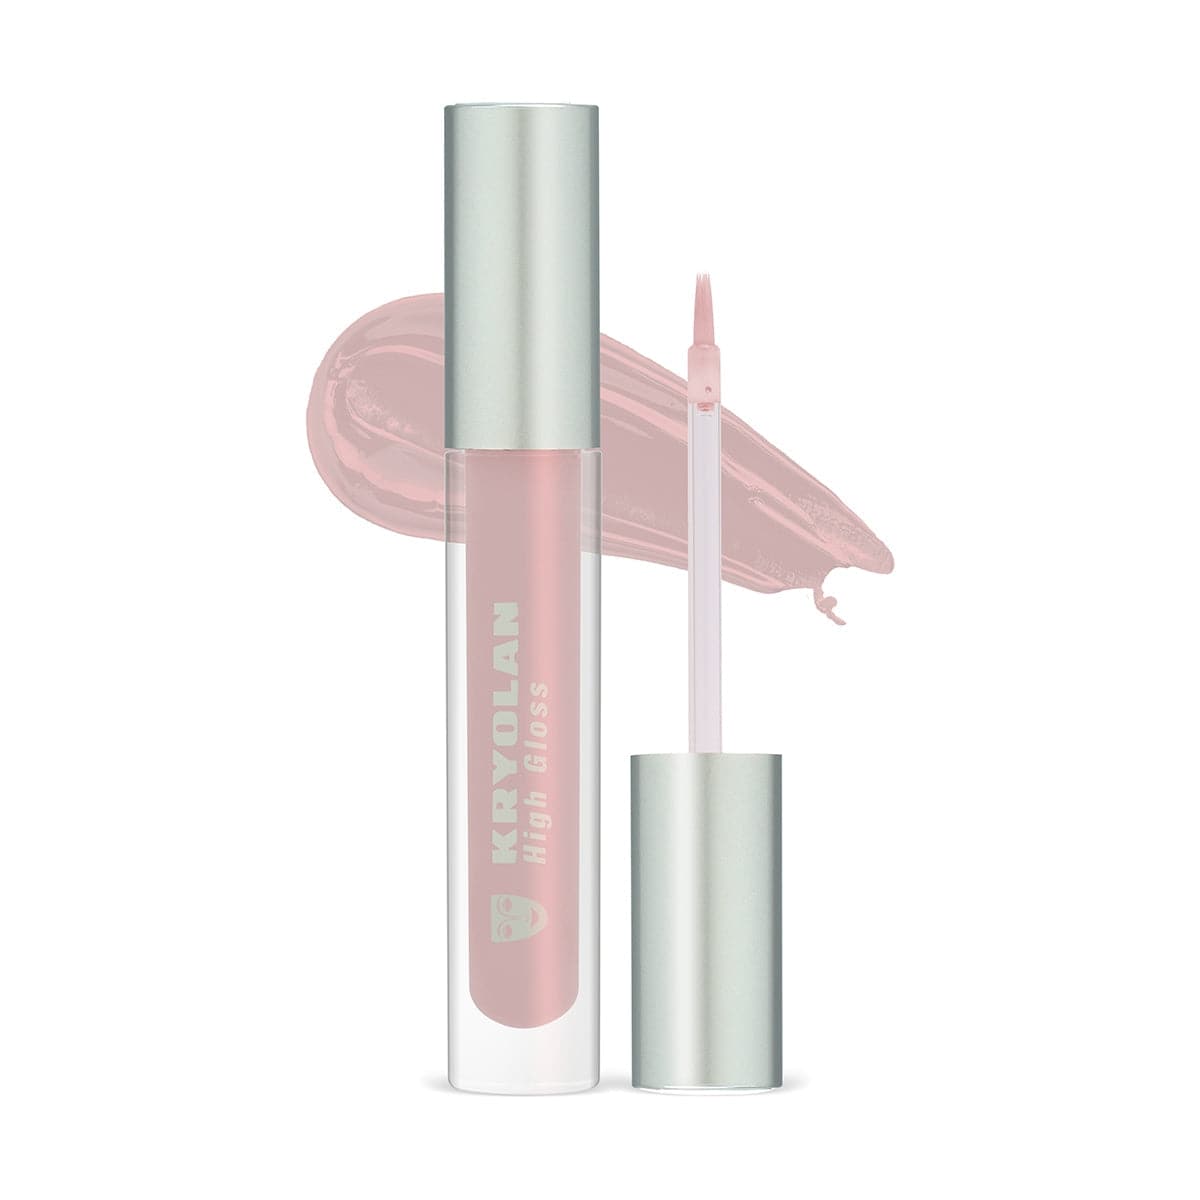 Kryolan High Gloss Brilliant Lip Shine - Fairy - Premium Health & Beauty from Kryolan - Just Rs 5170.00! Shop now at Cozmetica